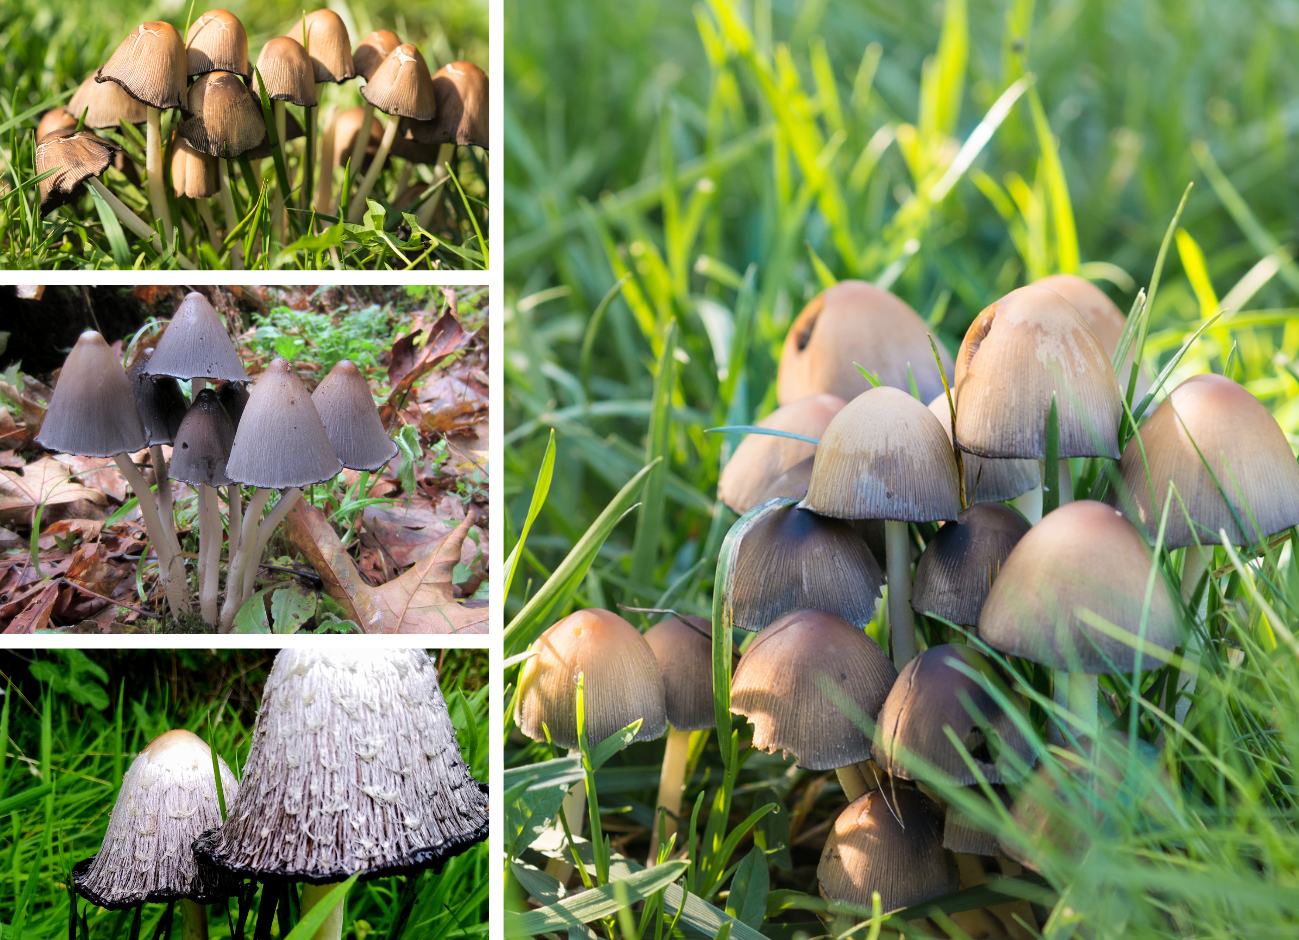 inky cap mushroom identification